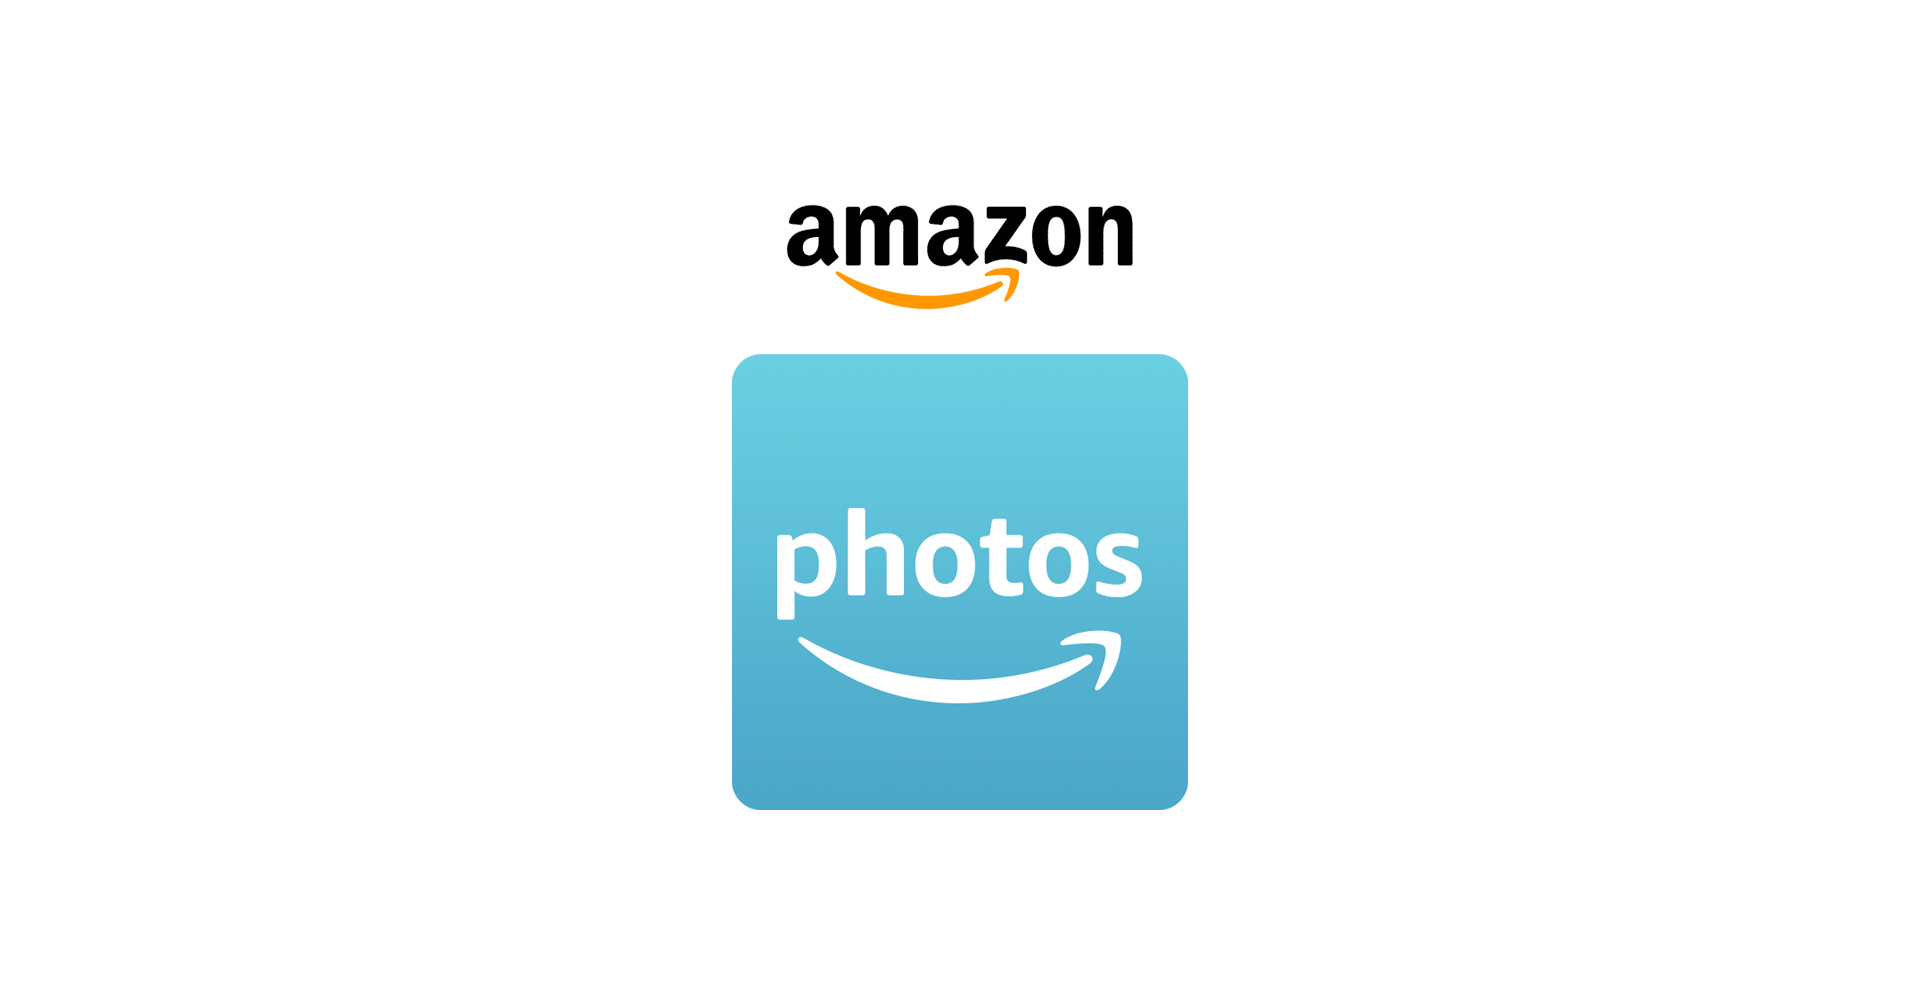 amazon prime photo storage cost